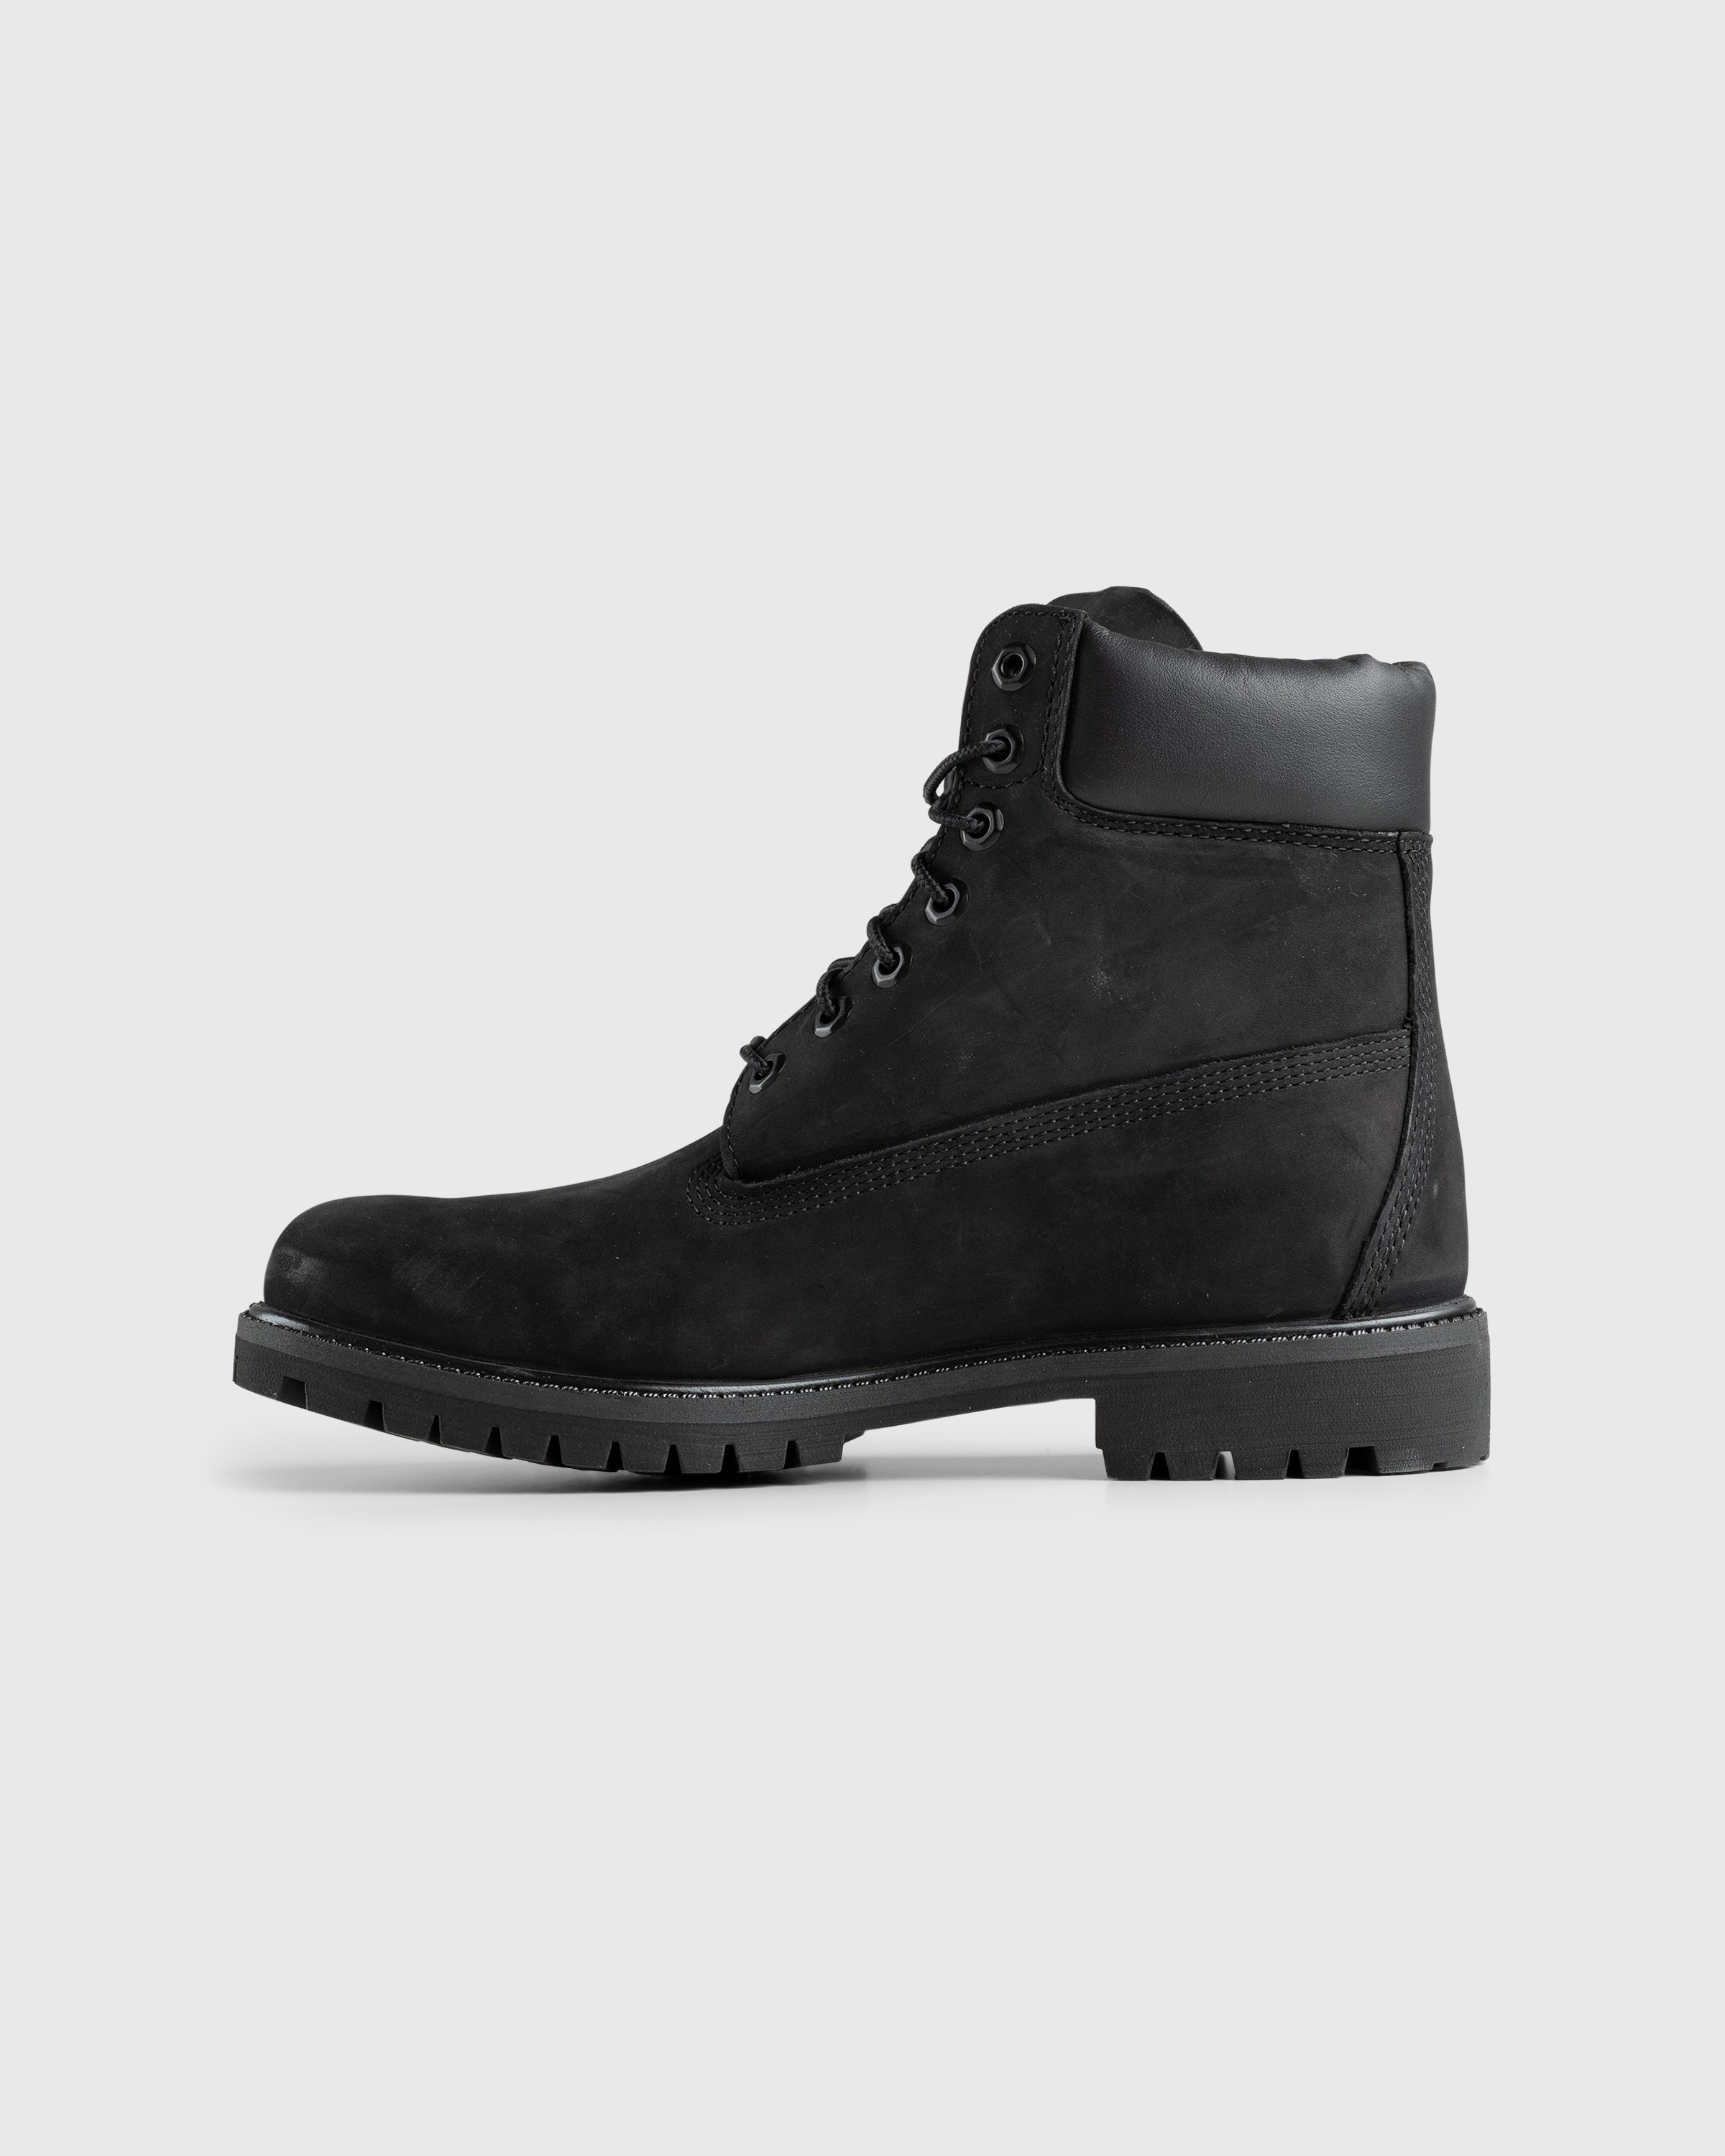 Timberland - 6 Inch Premium Boot Black - Footwear - Black - Image 2